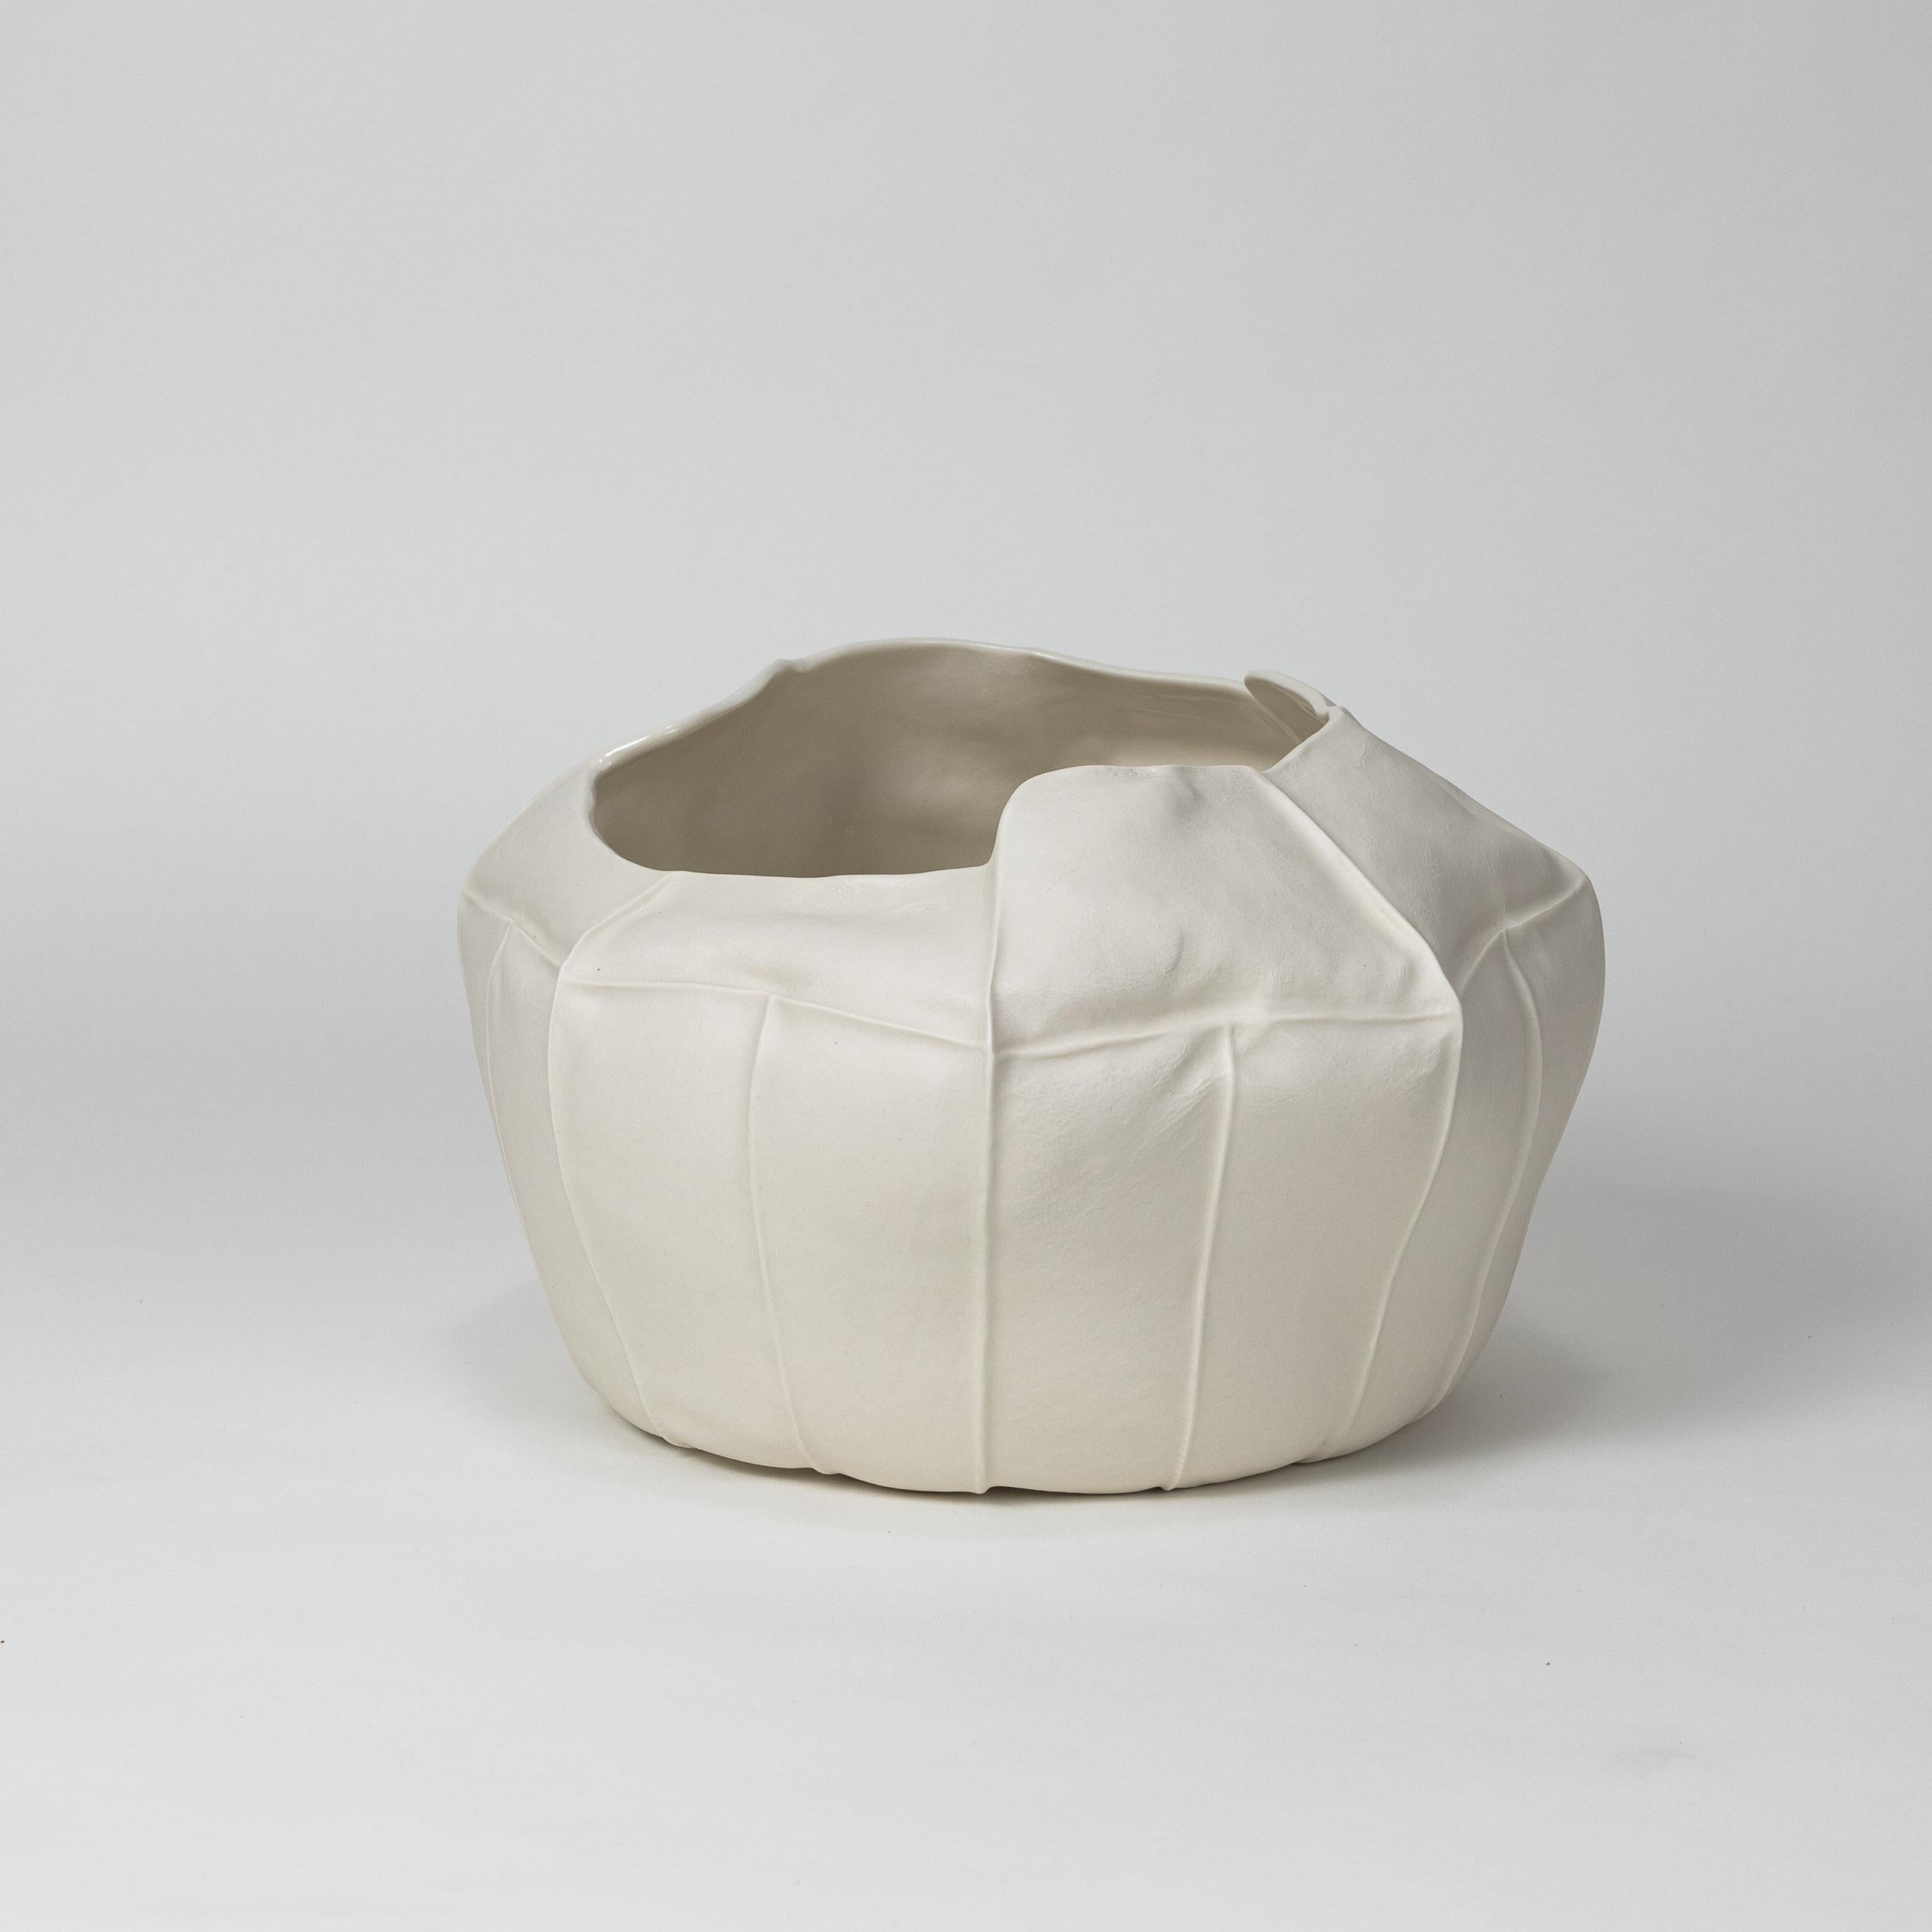 Other In-stock, Large Ceramic Kawa Vessel 2.1, Organic, White, tactile, porcelain 